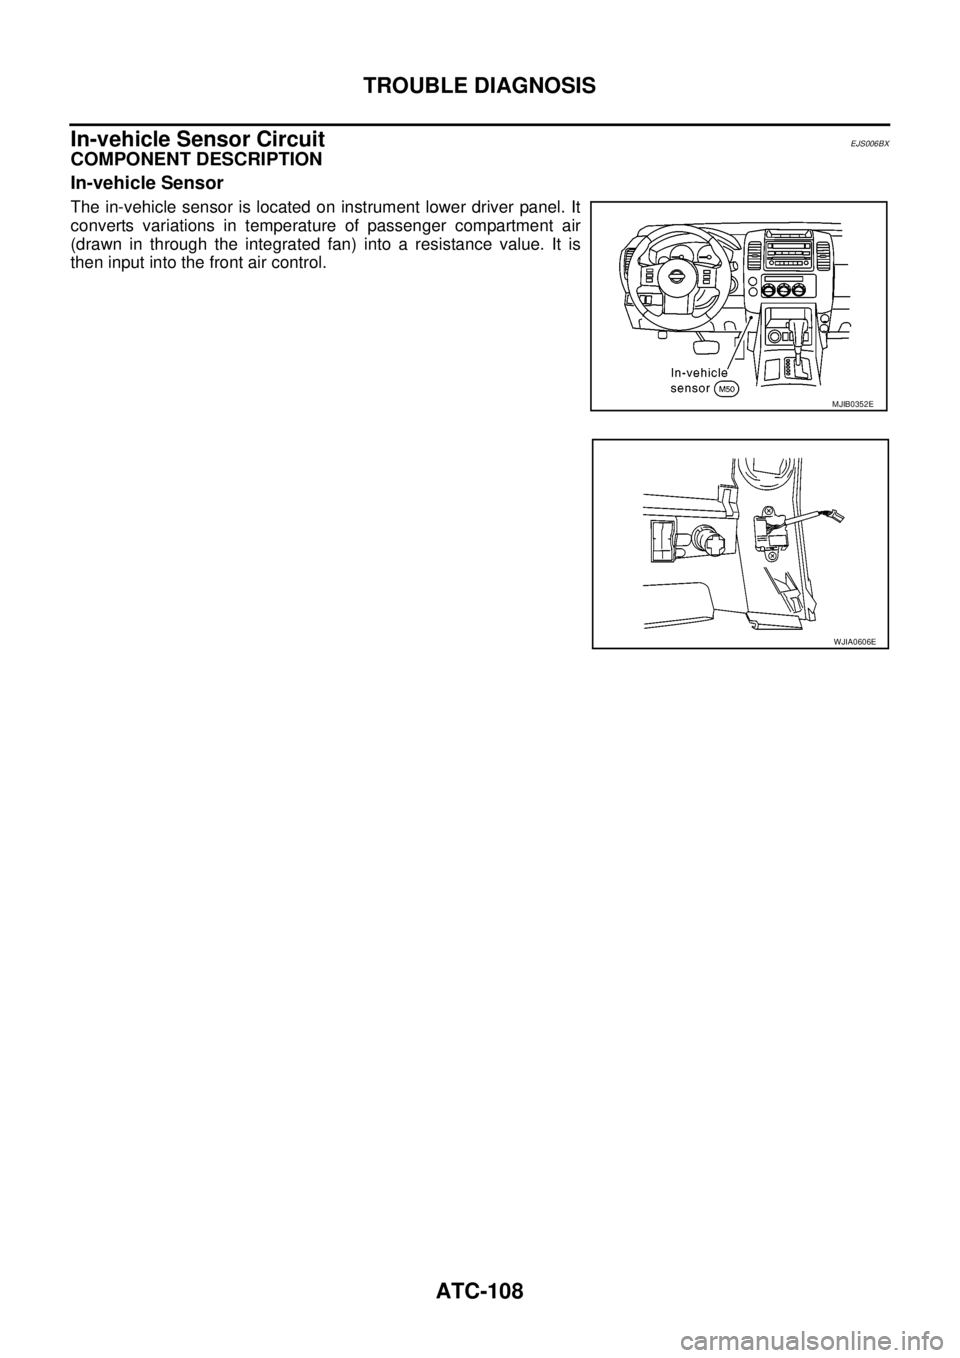 NISSAN NAVARA 2005  Repair Workshop Manual ATC-108
TROUBLE DIAGNOSIS
In-vehicle Sensor Circuit
EJS006BX
COMPONENT DESCRIPTION
In-vehicle Sensor
The in-vehicle sensor is located on instrument lower driver panel. It
converts variations in temper